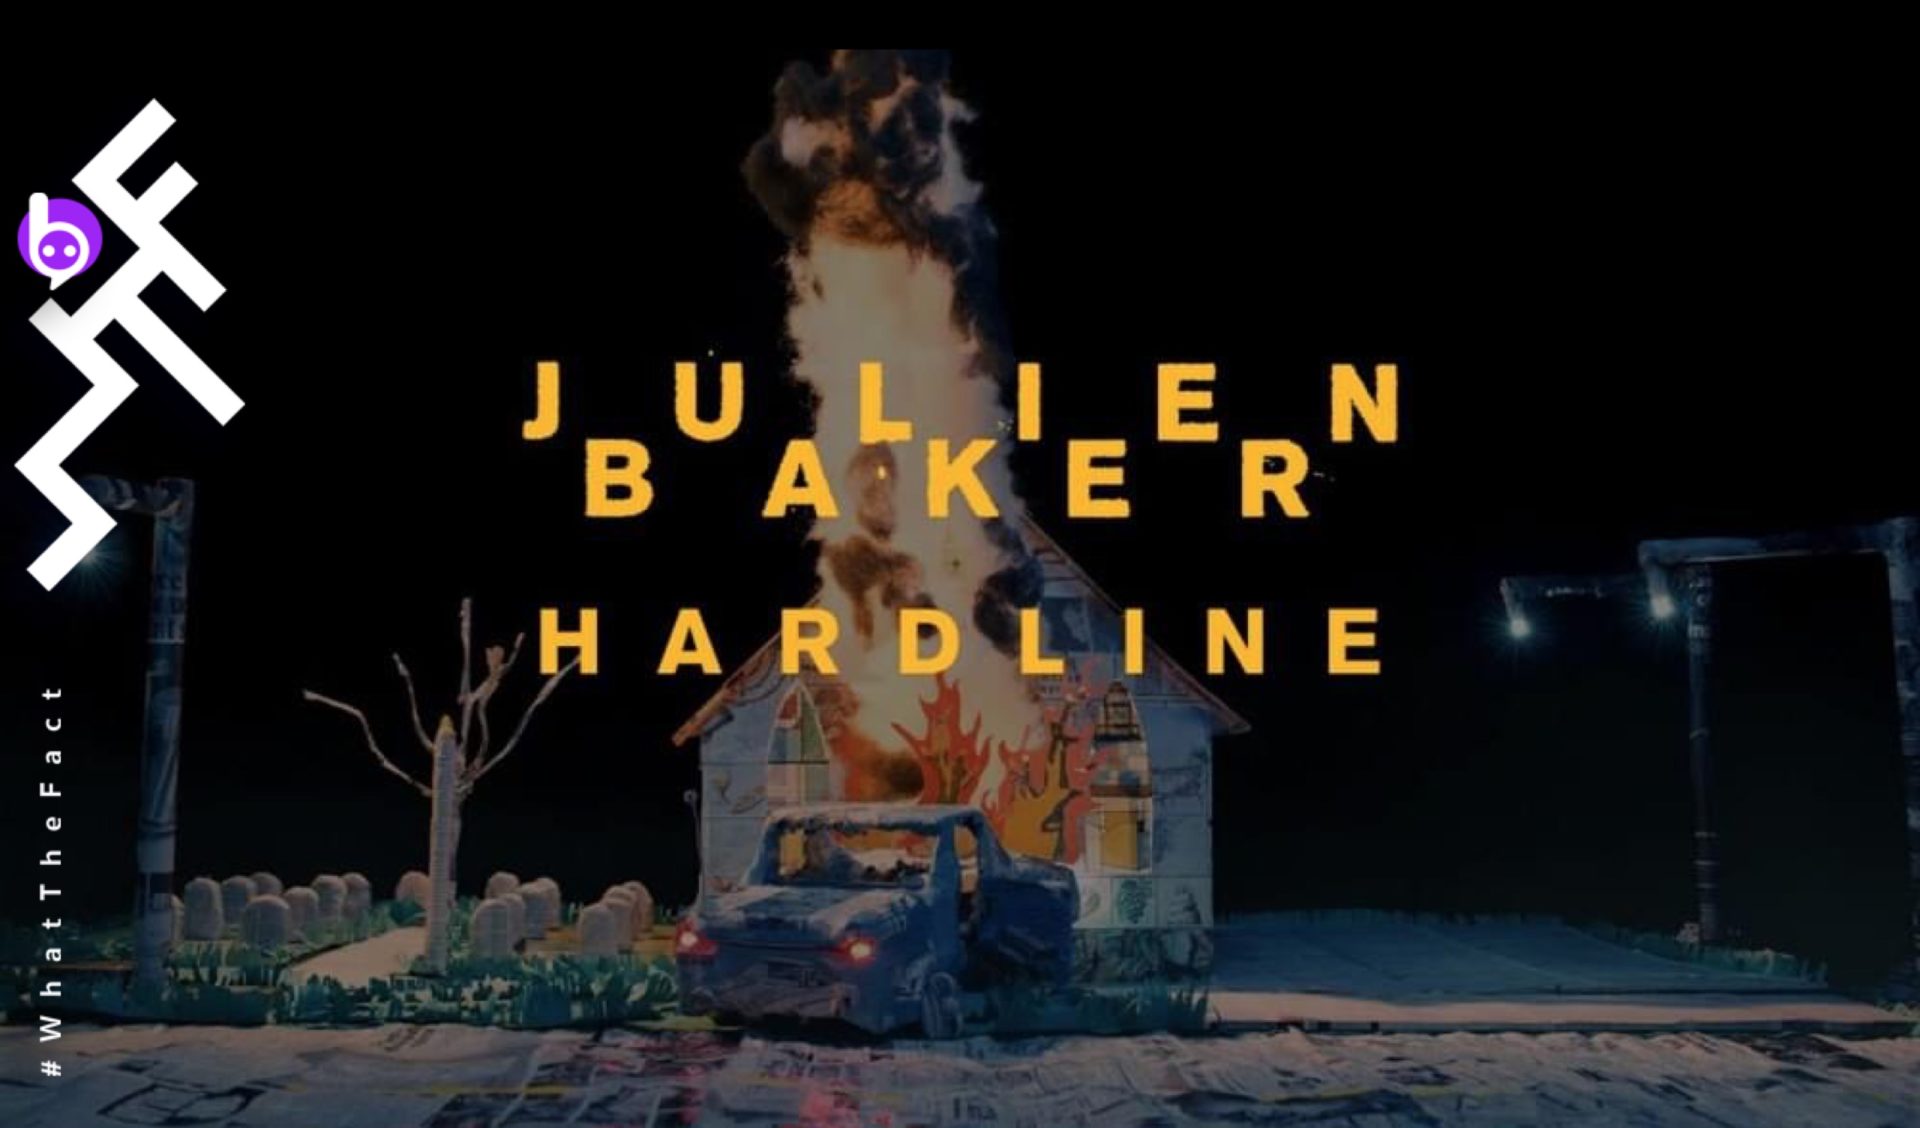 Julien Baker ปล่อยซิงเกิลใหม่ ‘Hardline’ พร้อม MV ในสไตล์ Stop-Motion